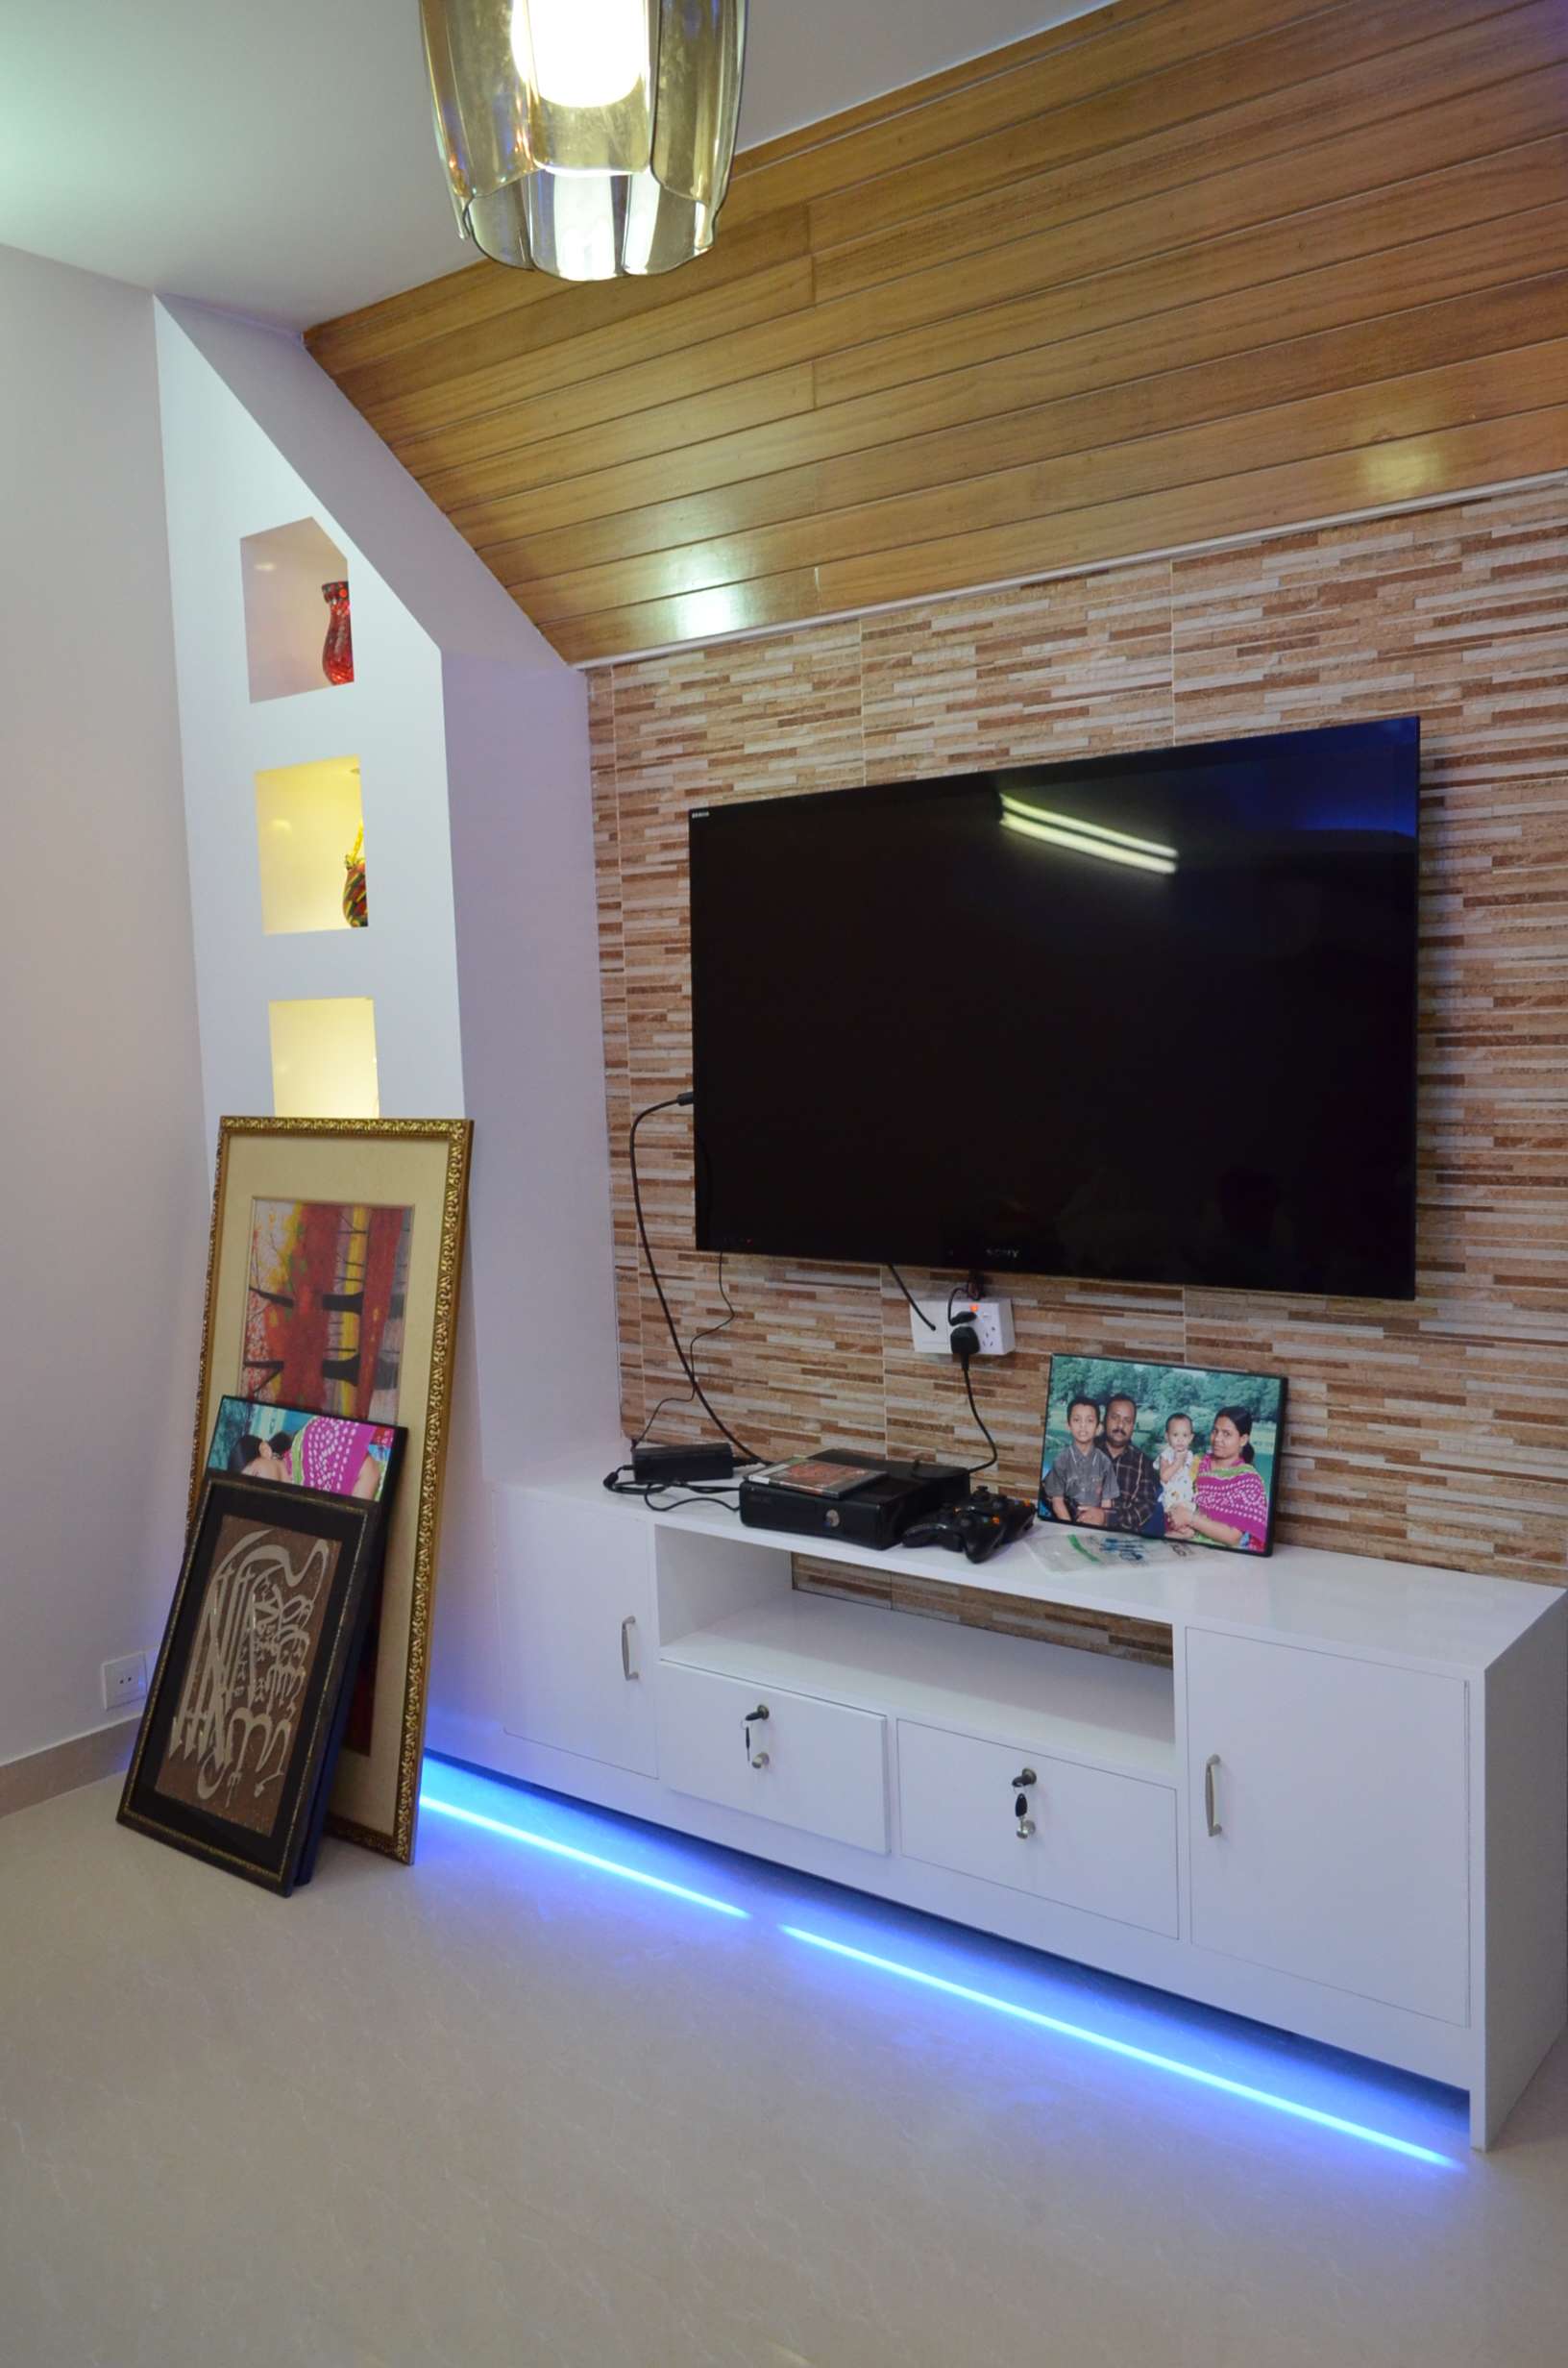 Masud Alam Dhanmondi Complete Project Drawing Room Interior Design (5)